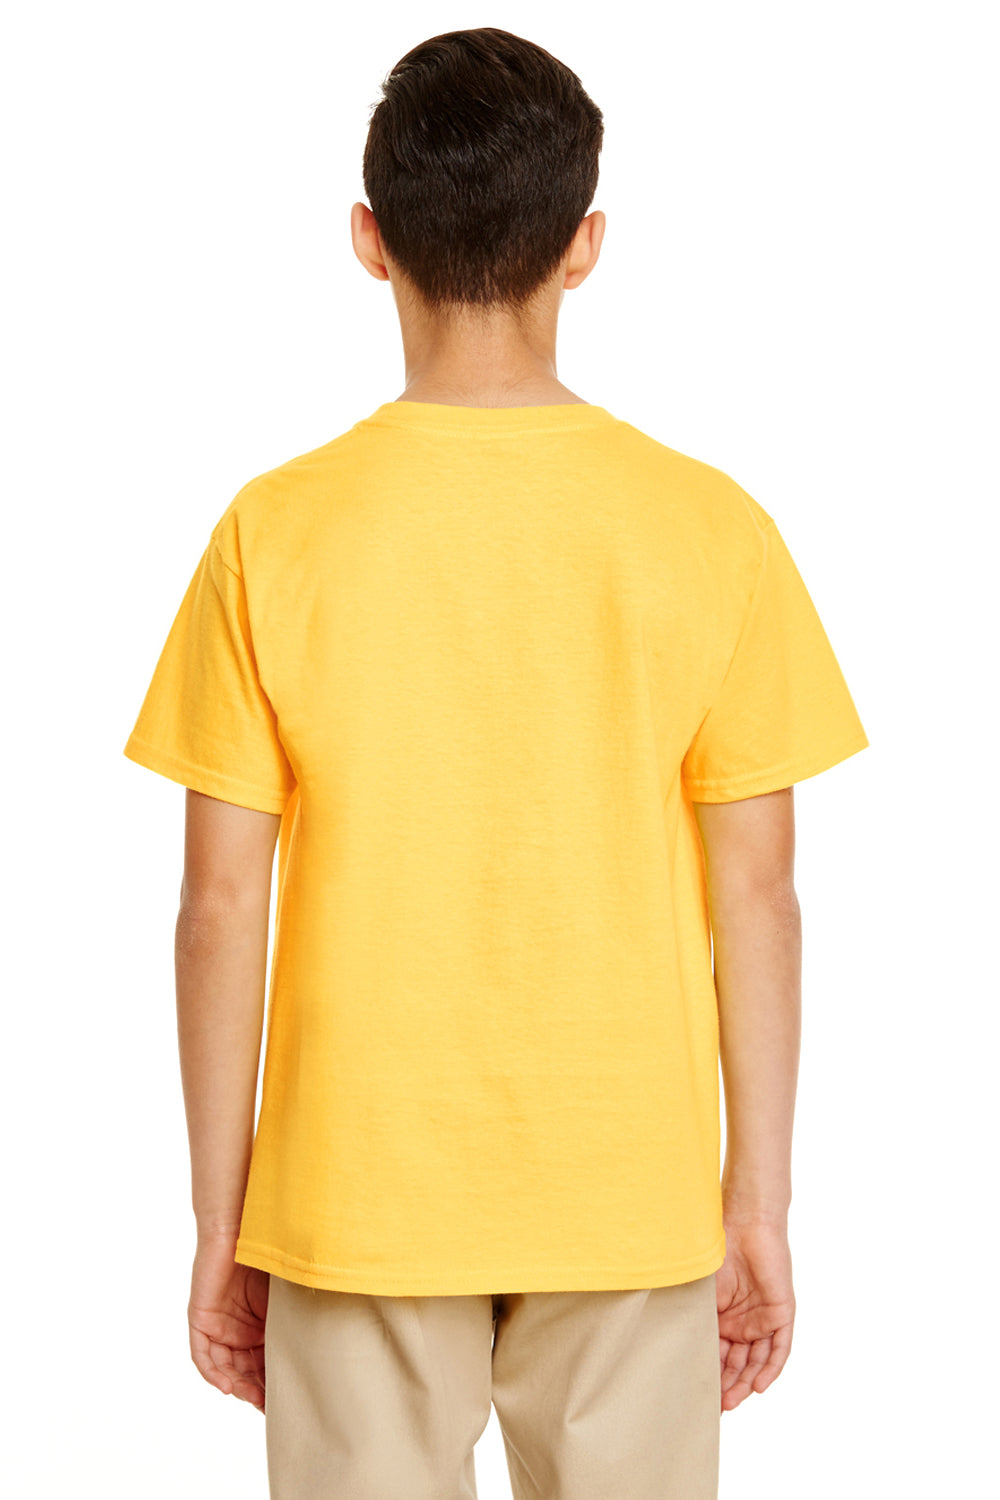 Gildan G645B Youth Softstyle Short Sleeve Crewneck T-Shirt Daisy Yellow Back